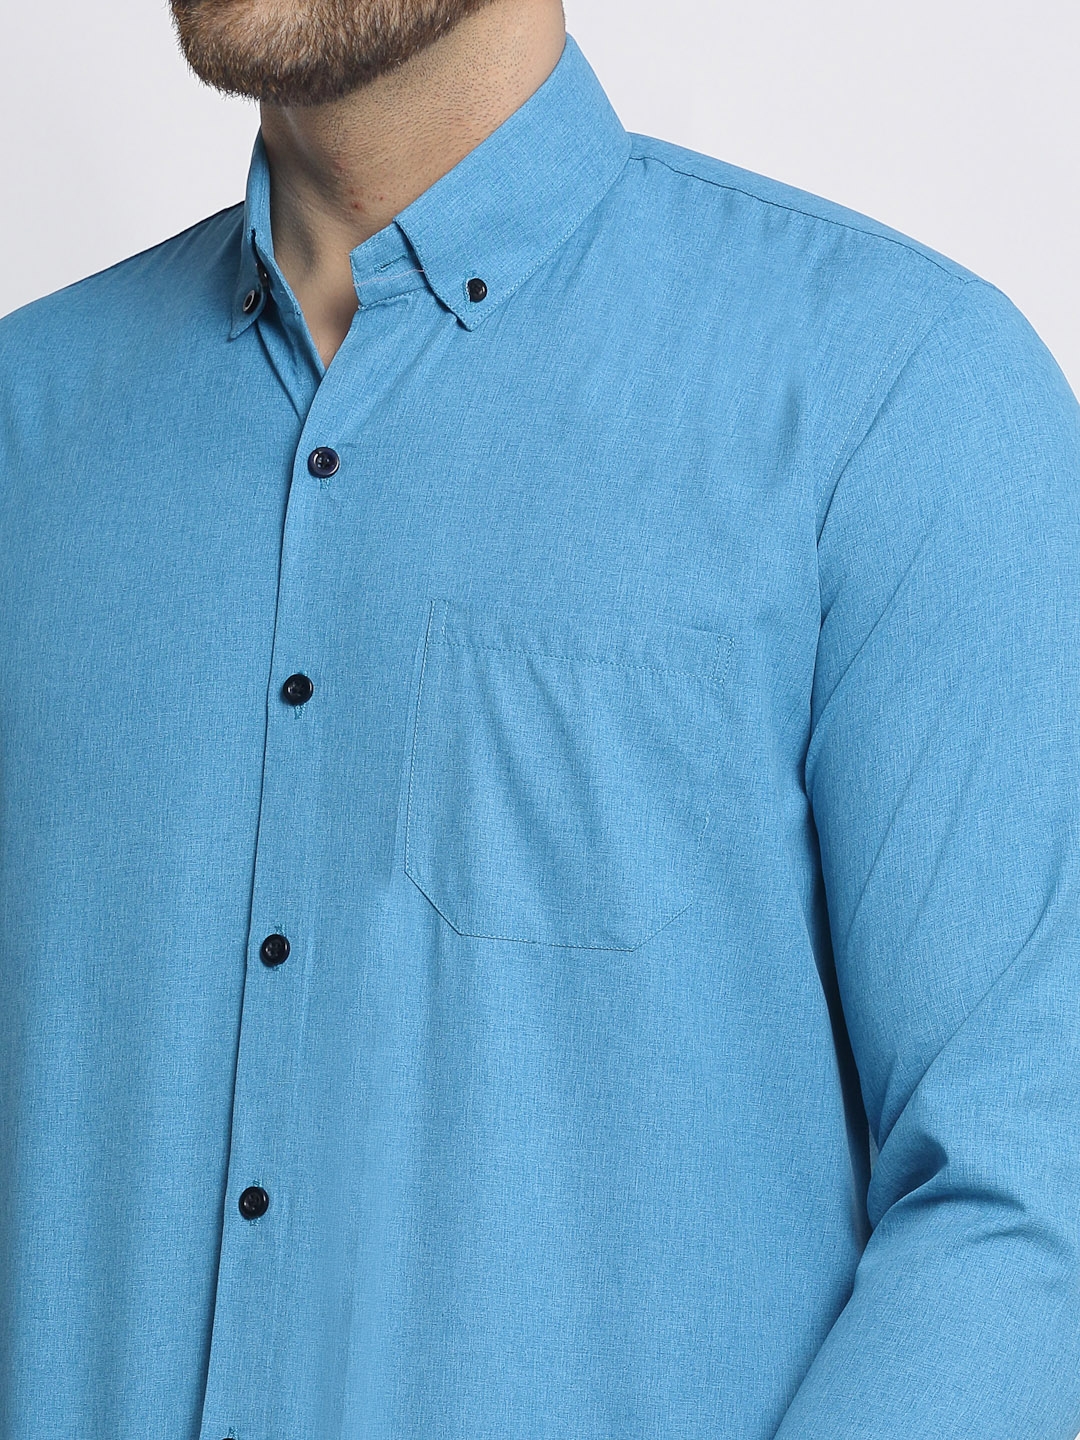 Jainish | Jainish Men's Cotton Solid Button Down Casual Shirts 3